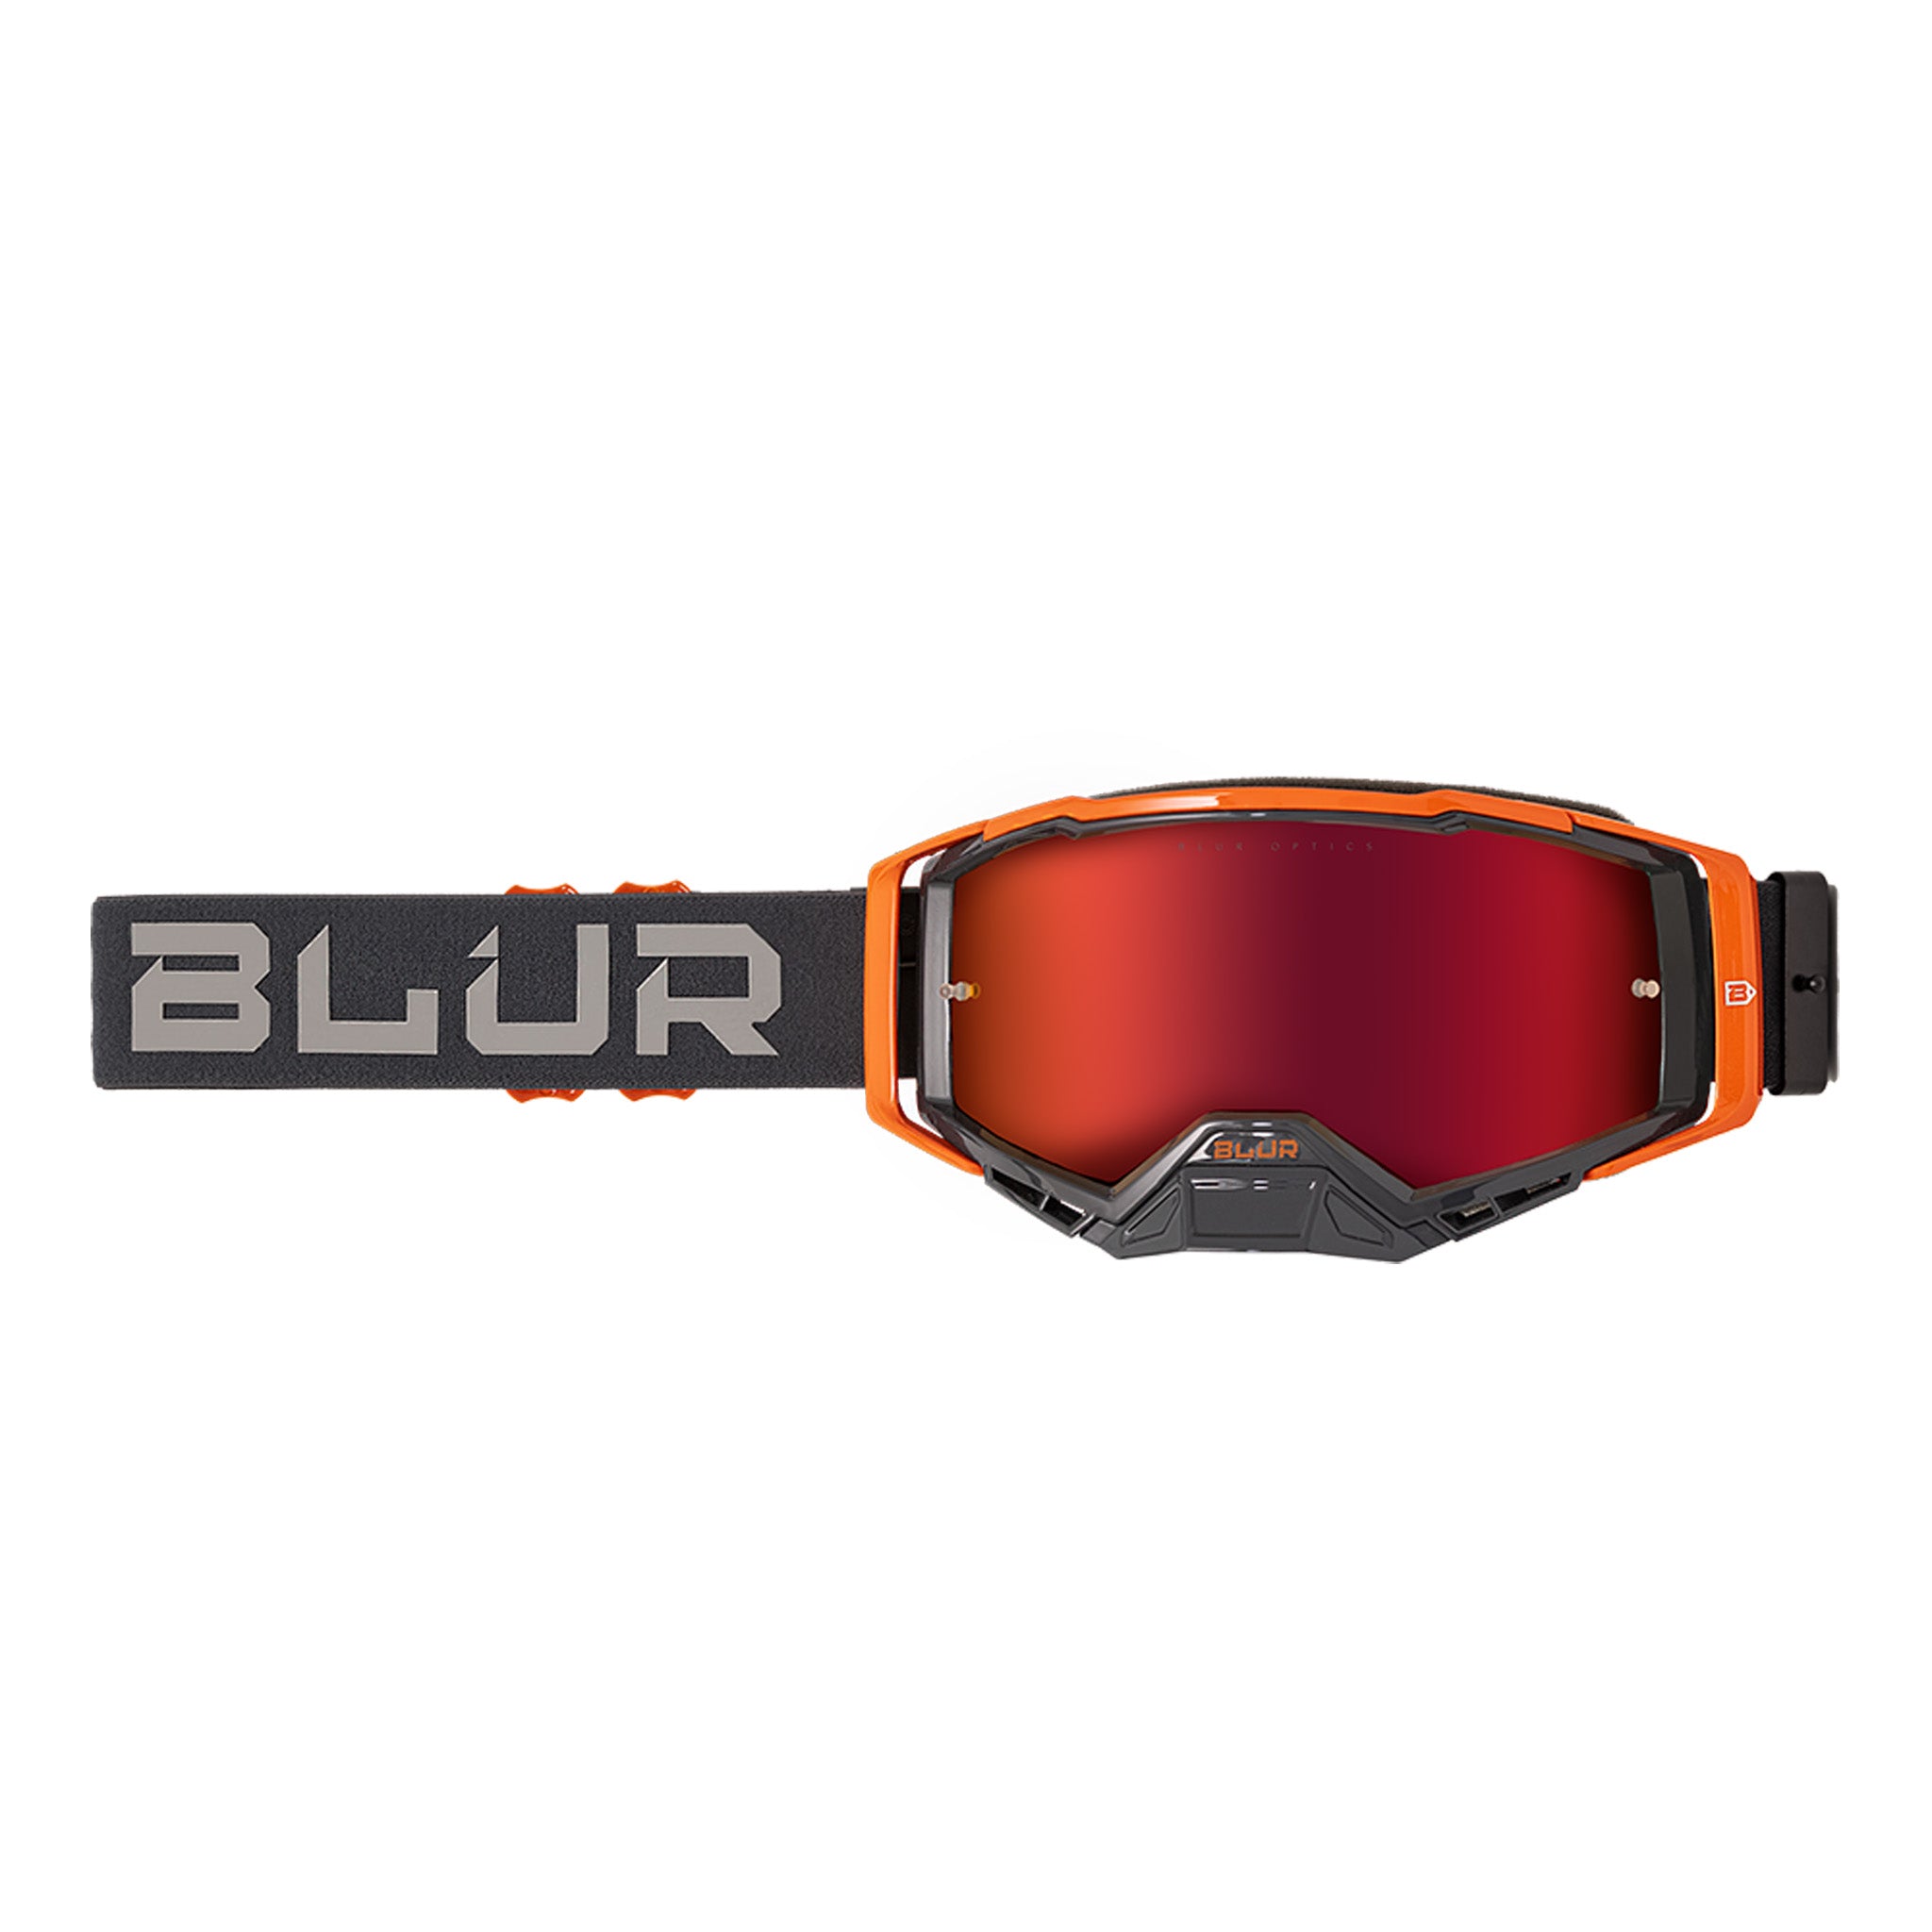 Blur Goggles B40 Goggle Gray/Orange Radium Red Lens